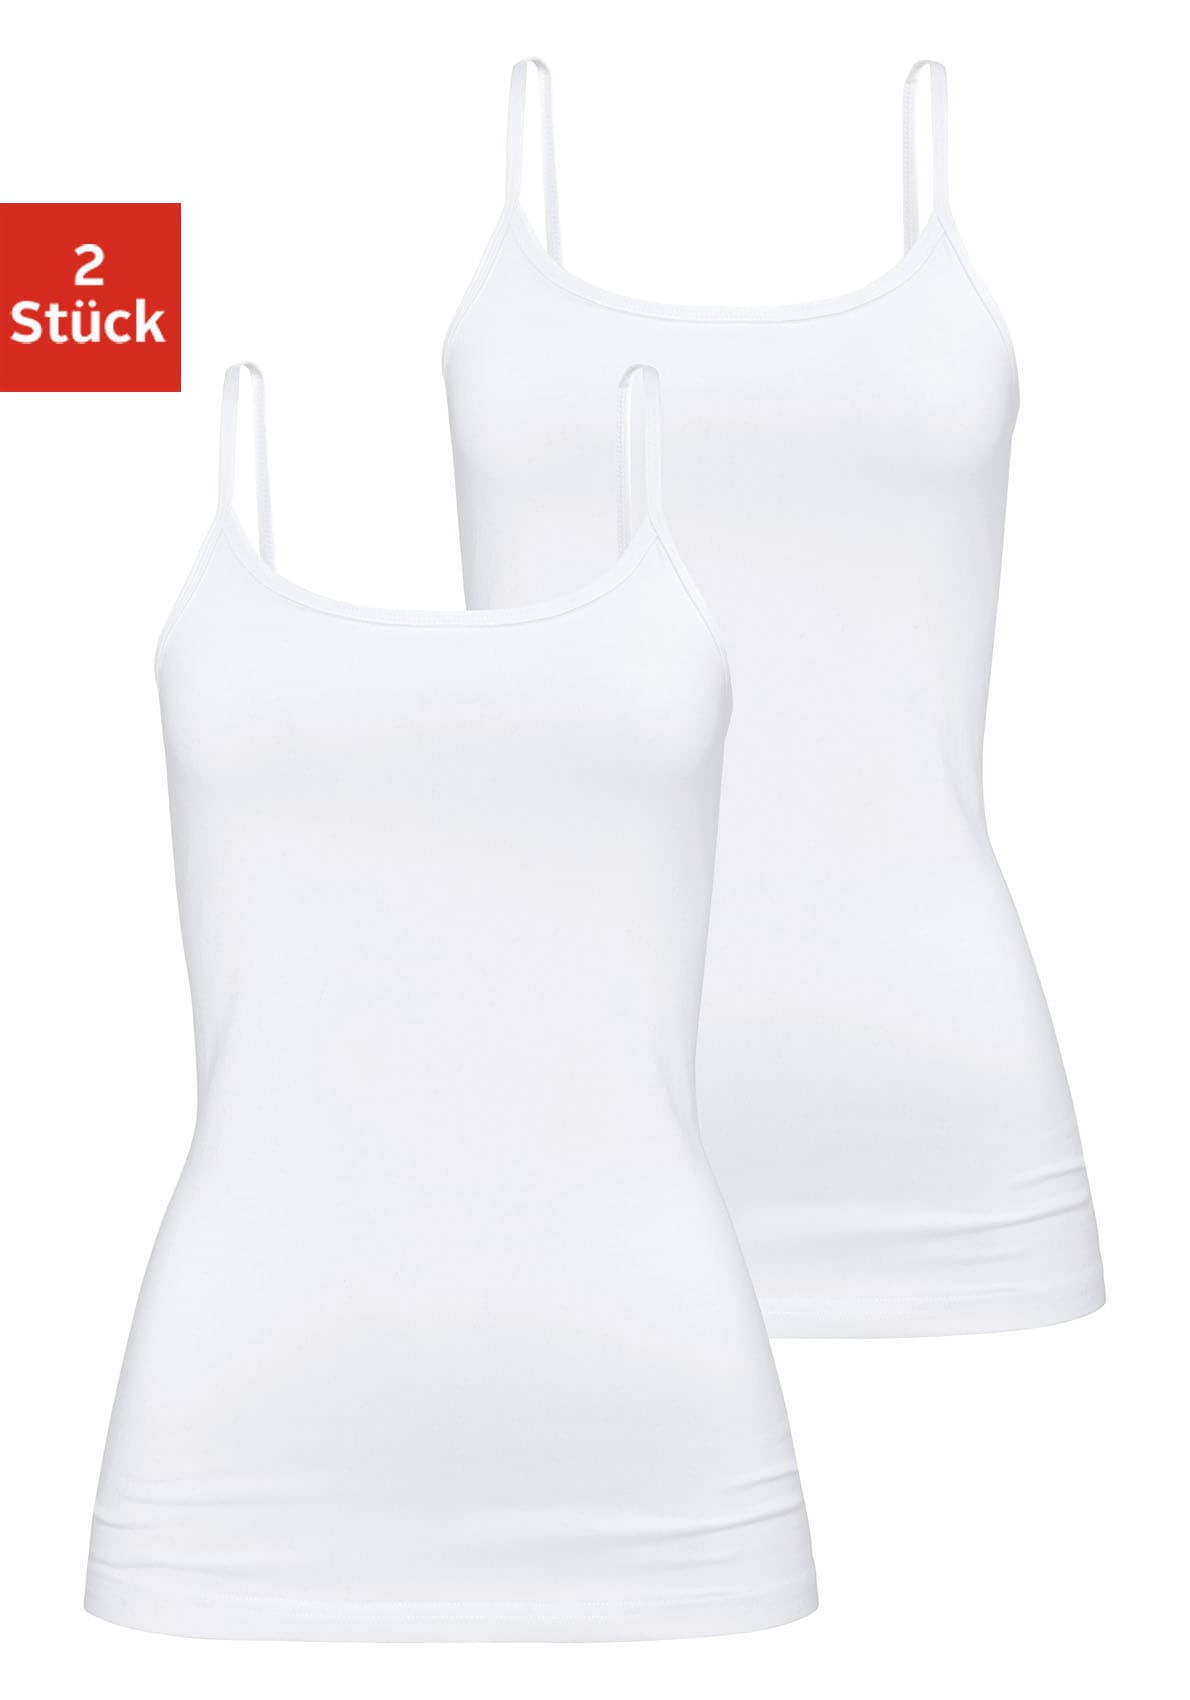 Unterhemd, Unterziehshirt Spaghettiträger-Top, bei H.I.S aus OTTO online (2er-Pack), elastischer Baumwoll-Qualität,